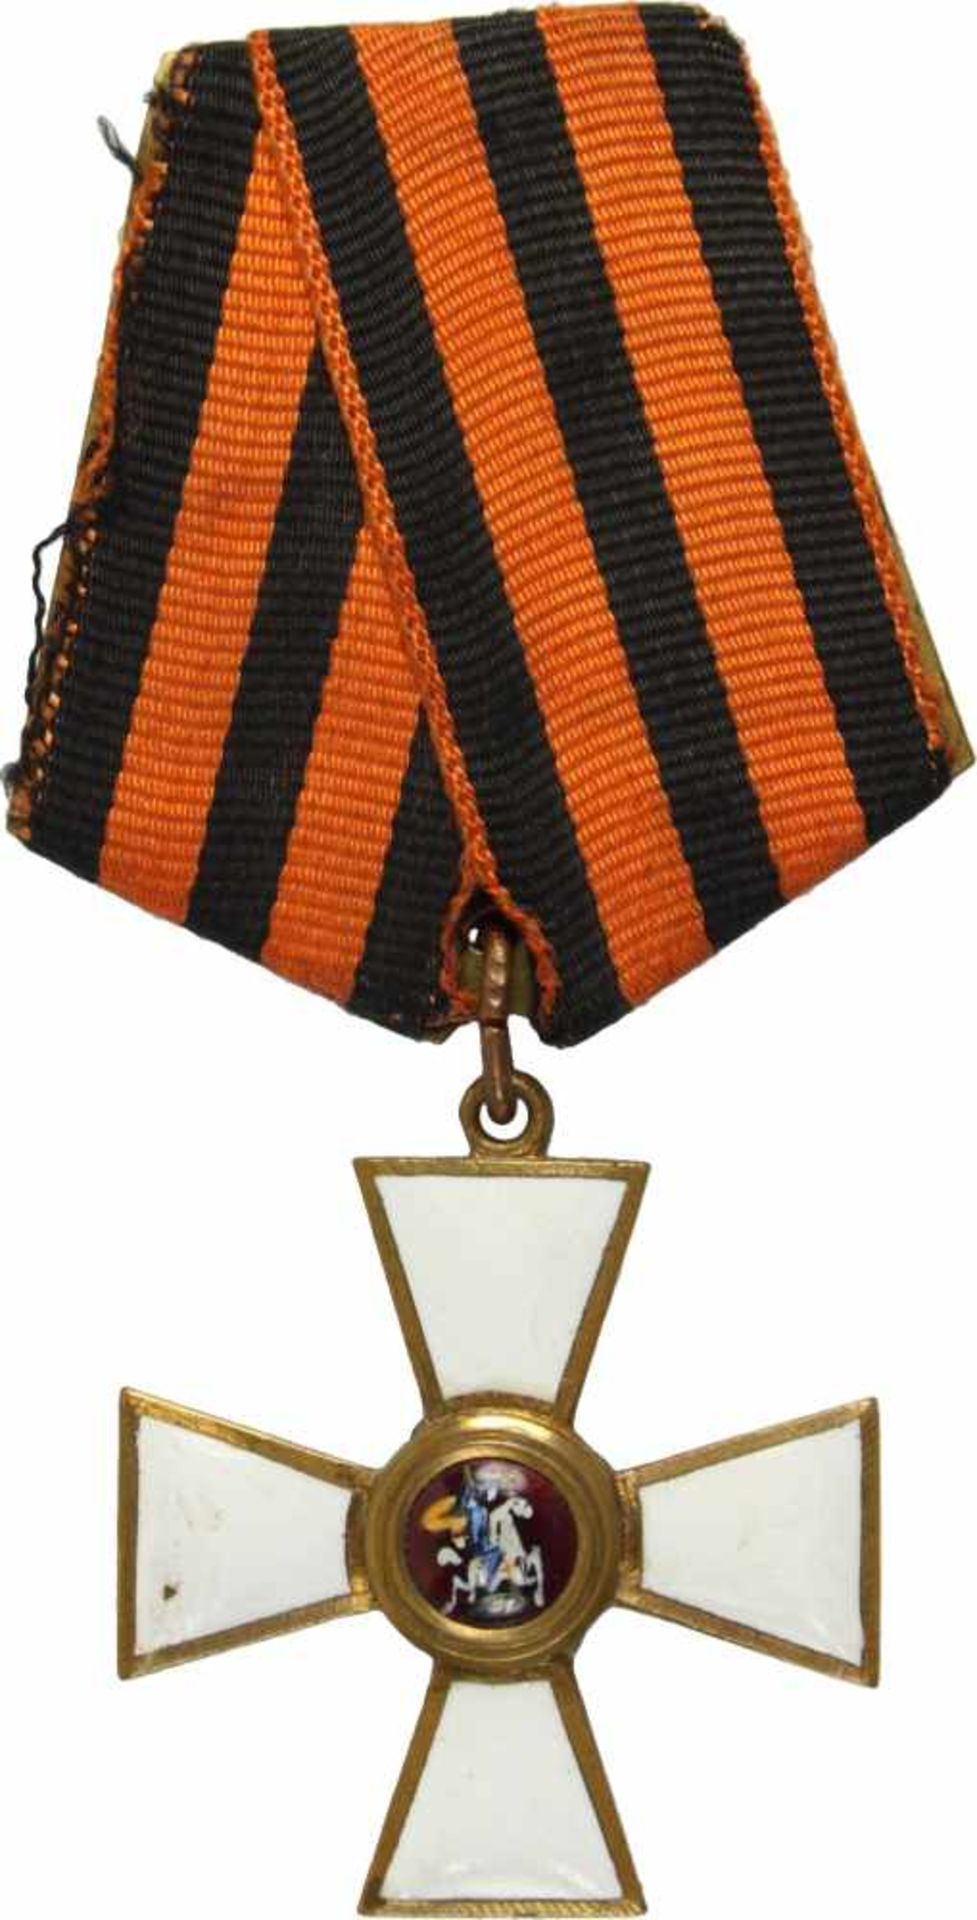 St. Georgs-Orden,Kreuz 4. Klasse. Kreuz Bronze vergoldet und emailliert, 36mm, gemaltes Medaillon